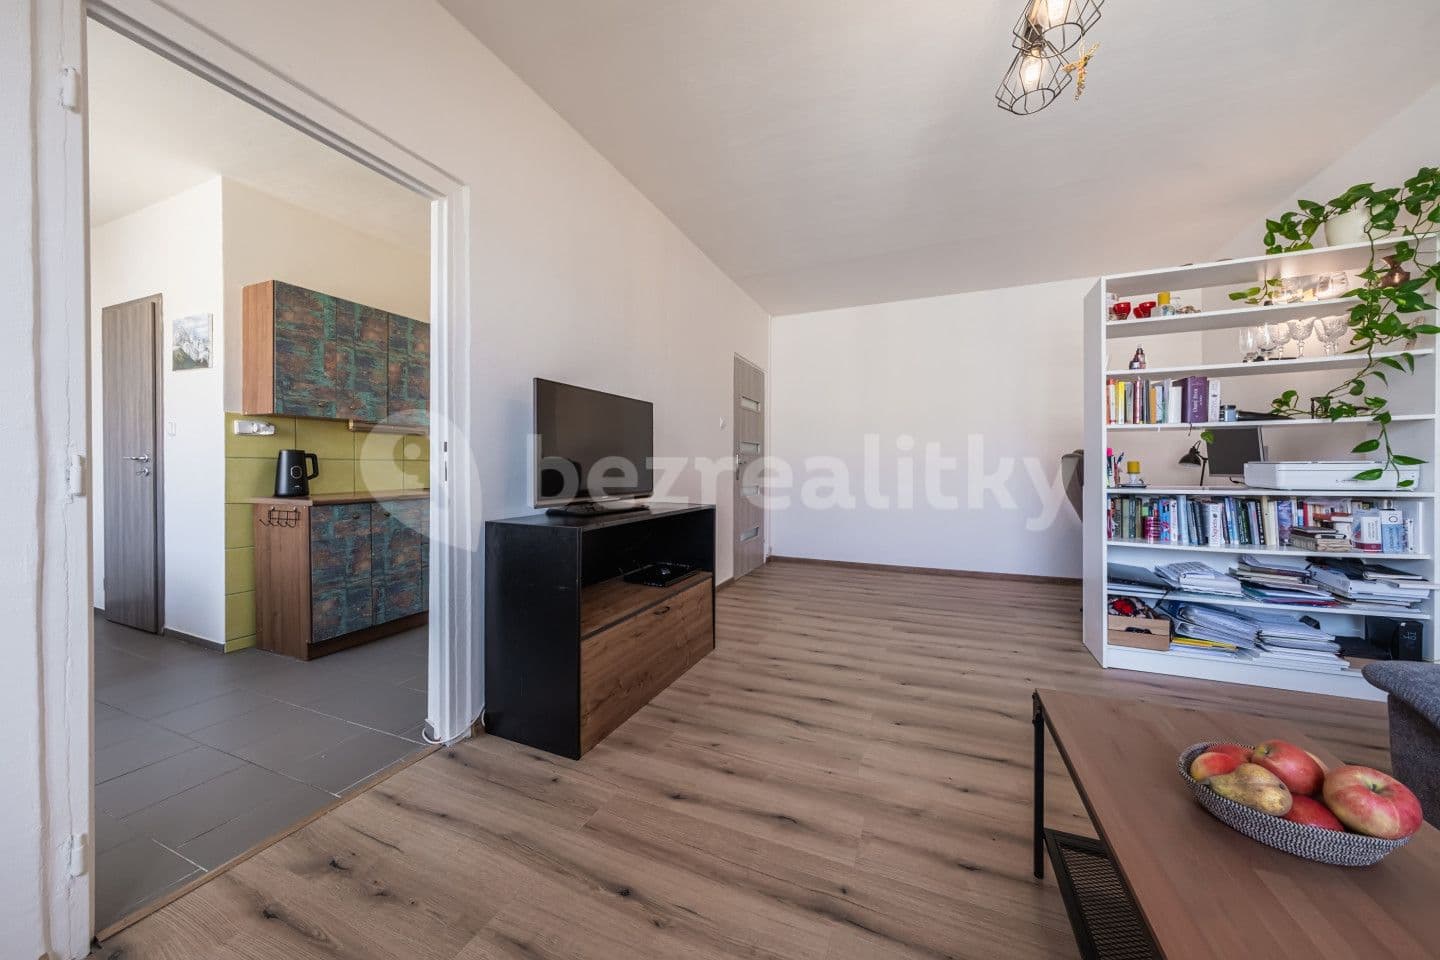 2 bedroom flat for sale, 62 m², Kostnická, Chomutov, Ústecký Region